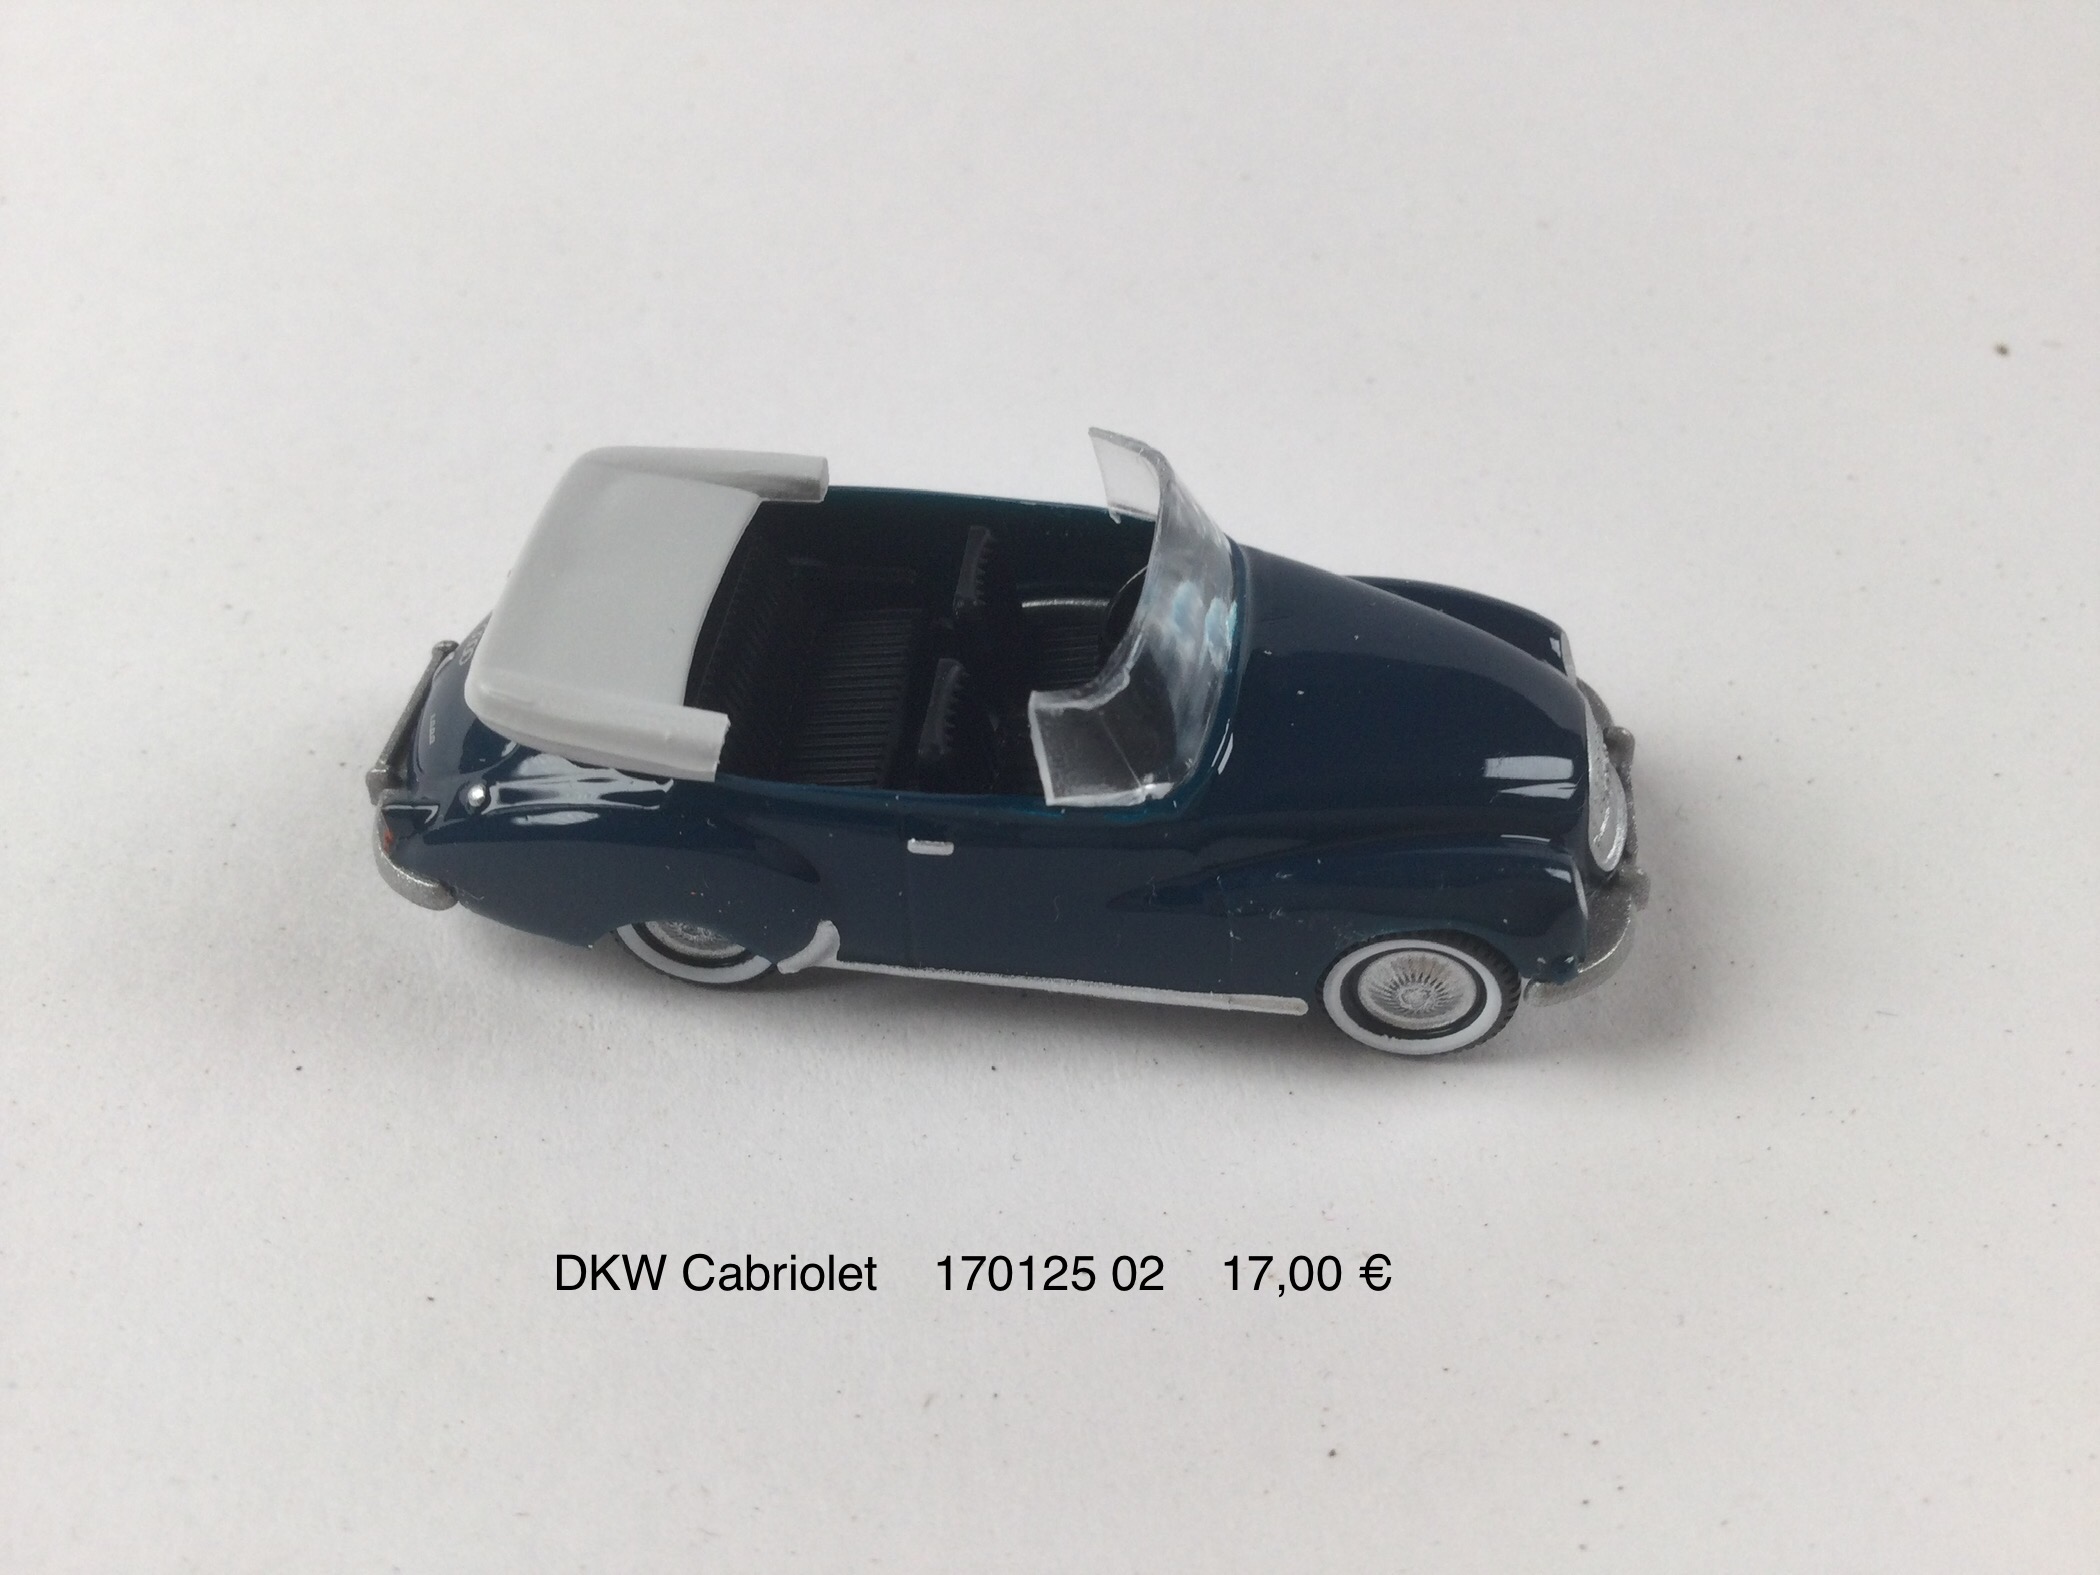 DKW Cabriolet